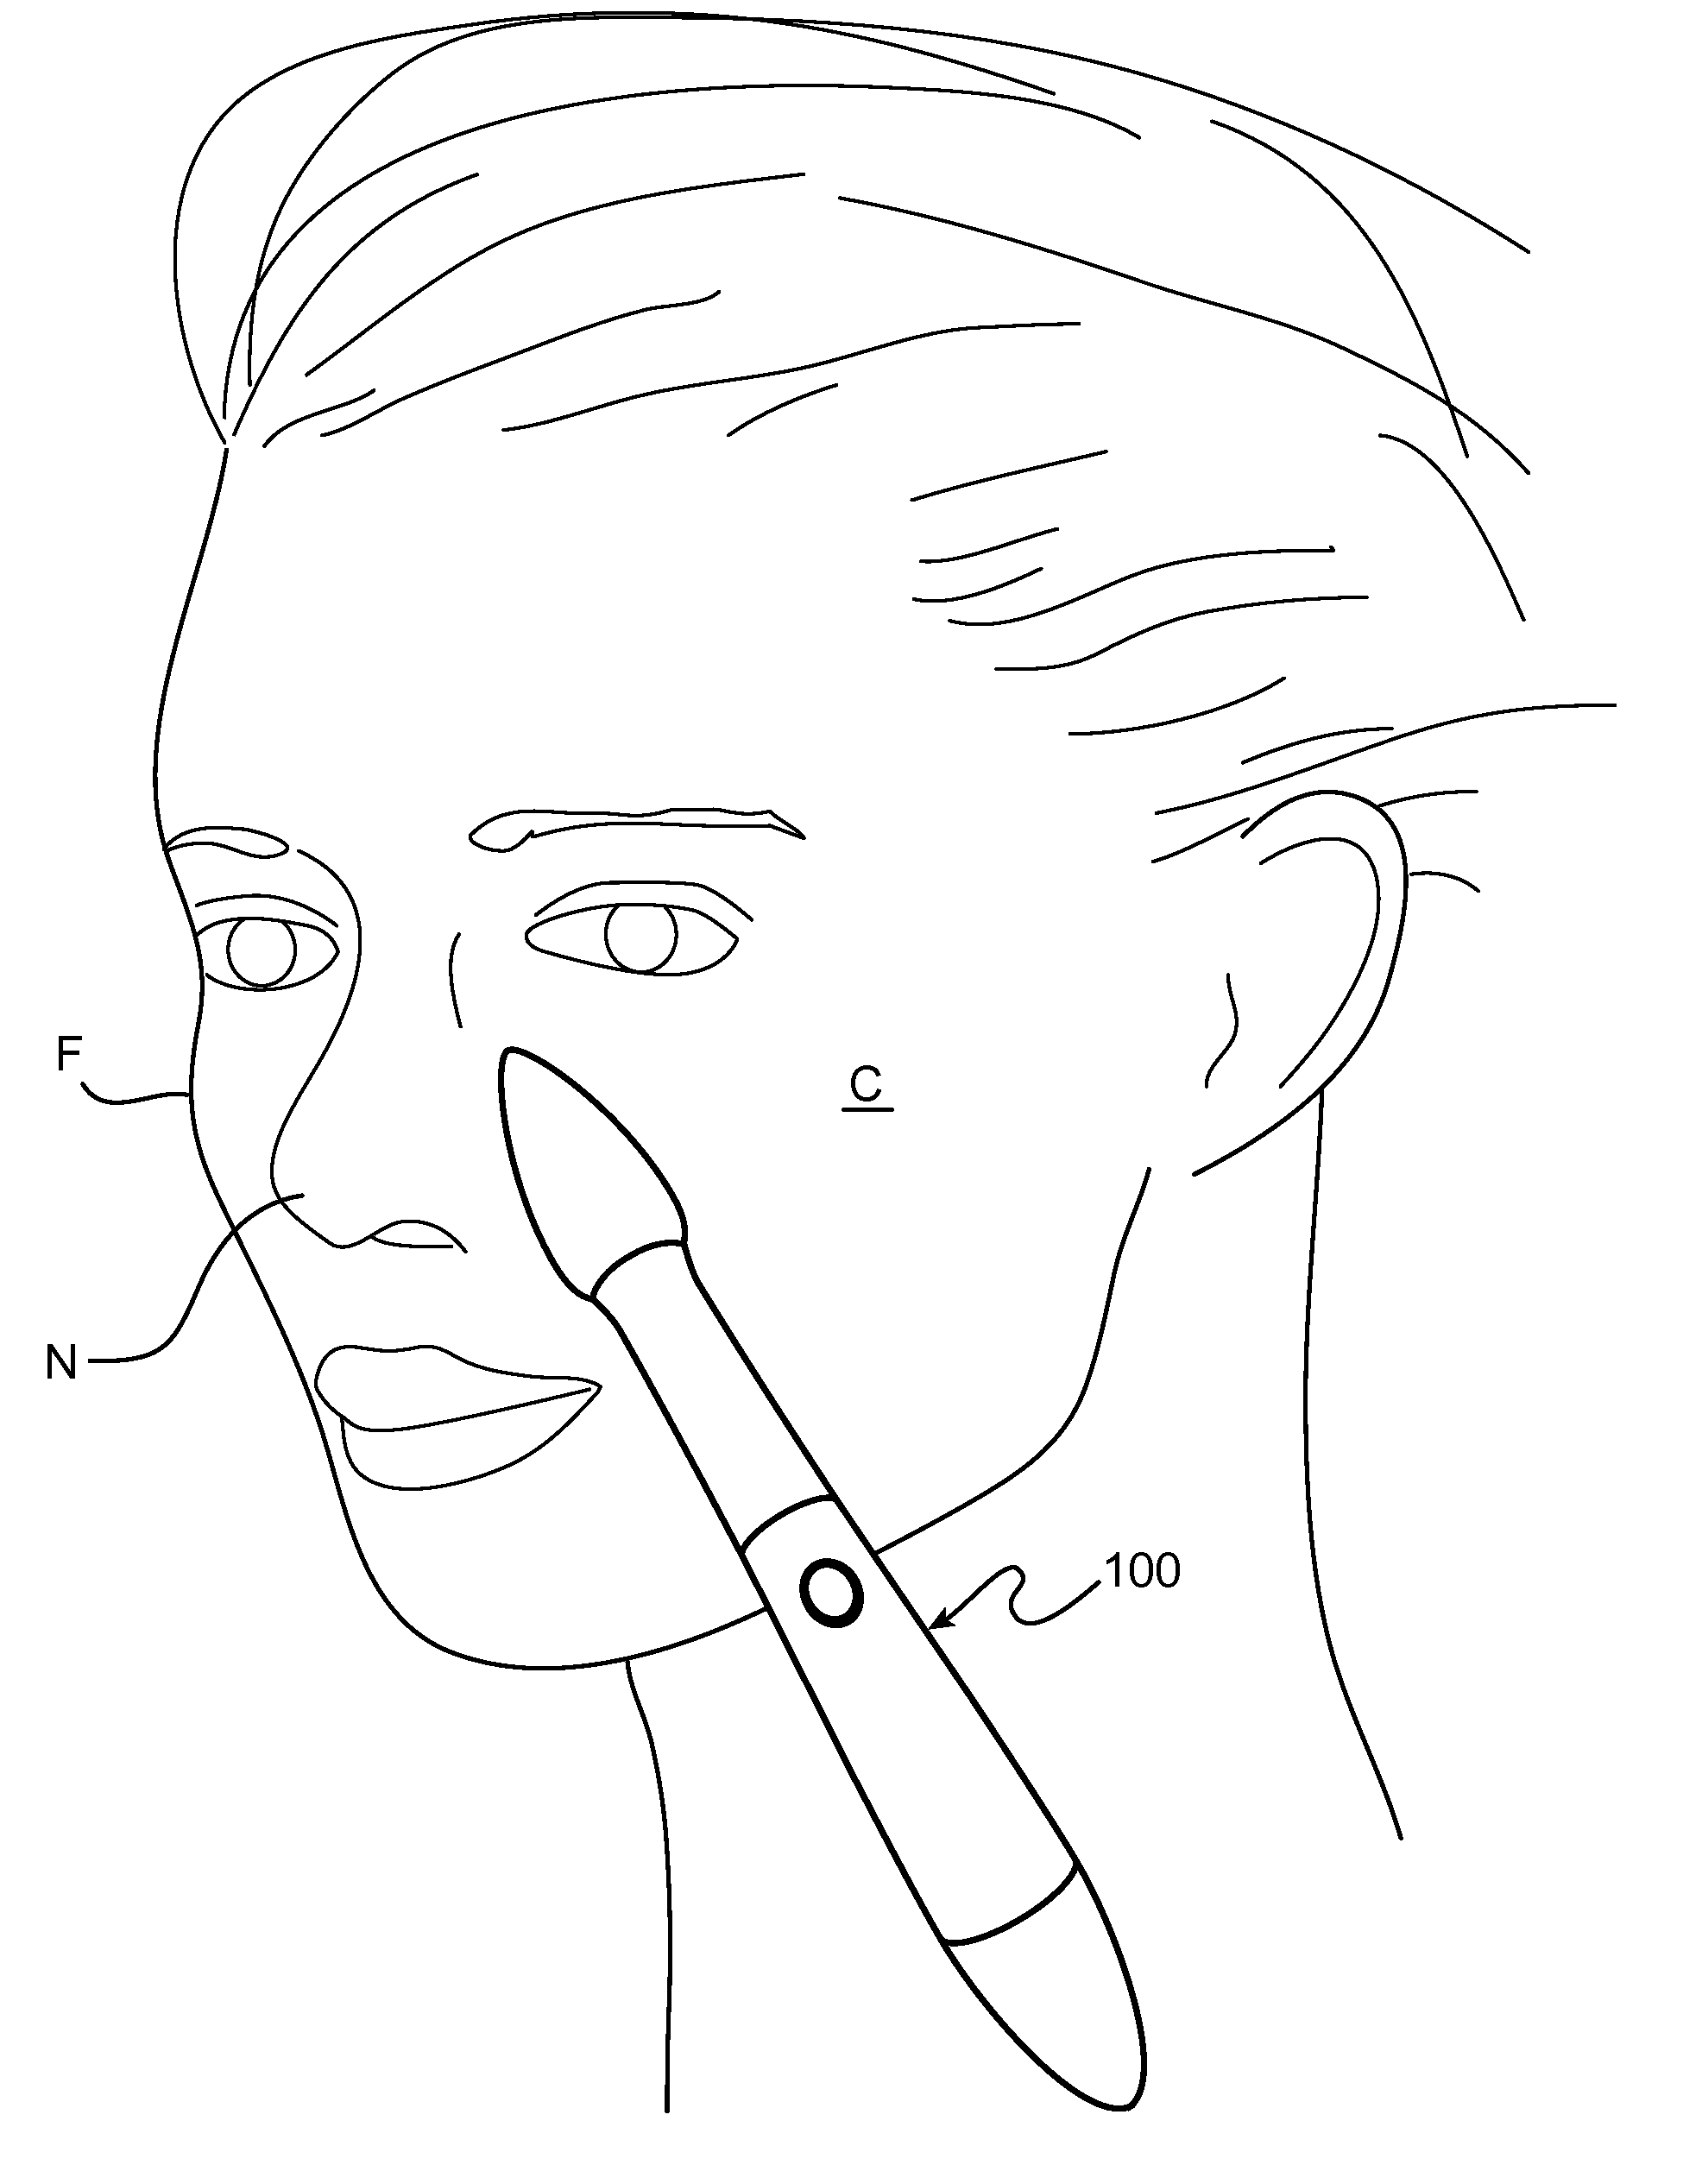 Skin treatment device